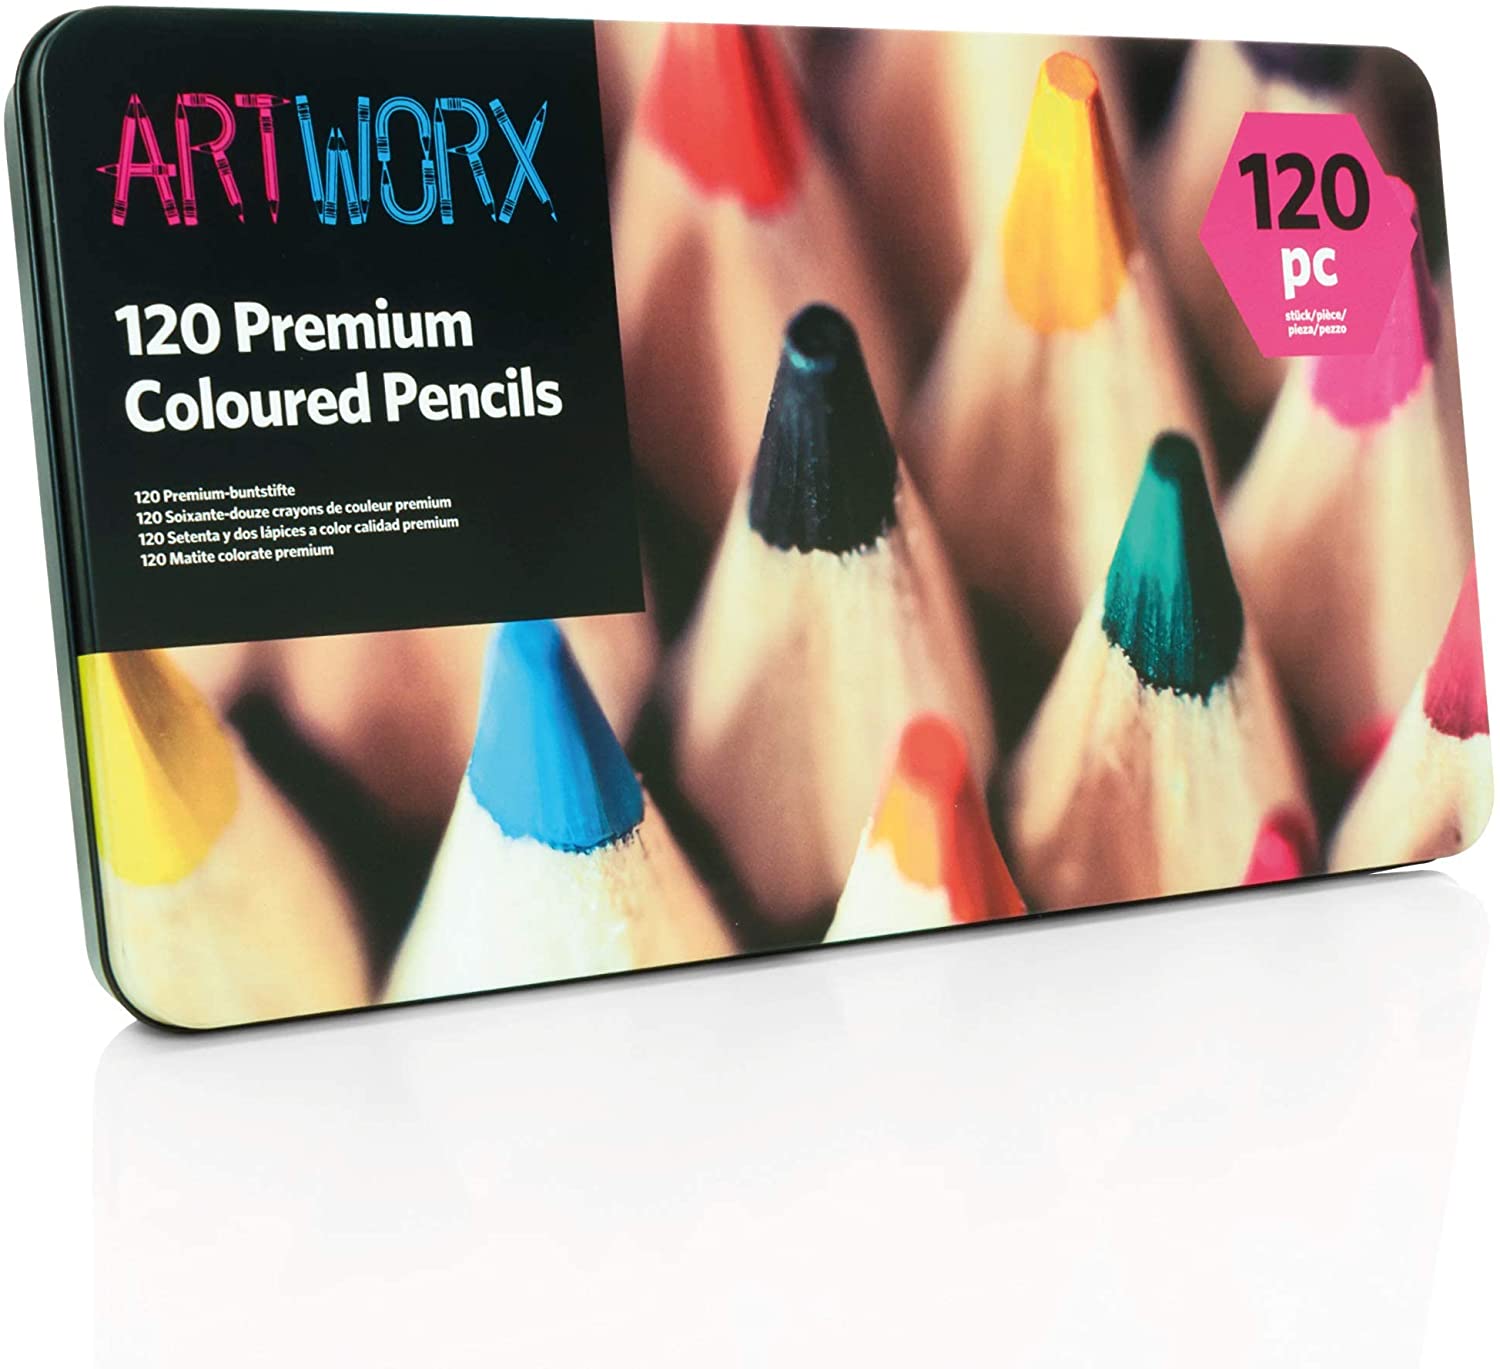 Artworx Premium Artists Colouring Art Pencils case photo